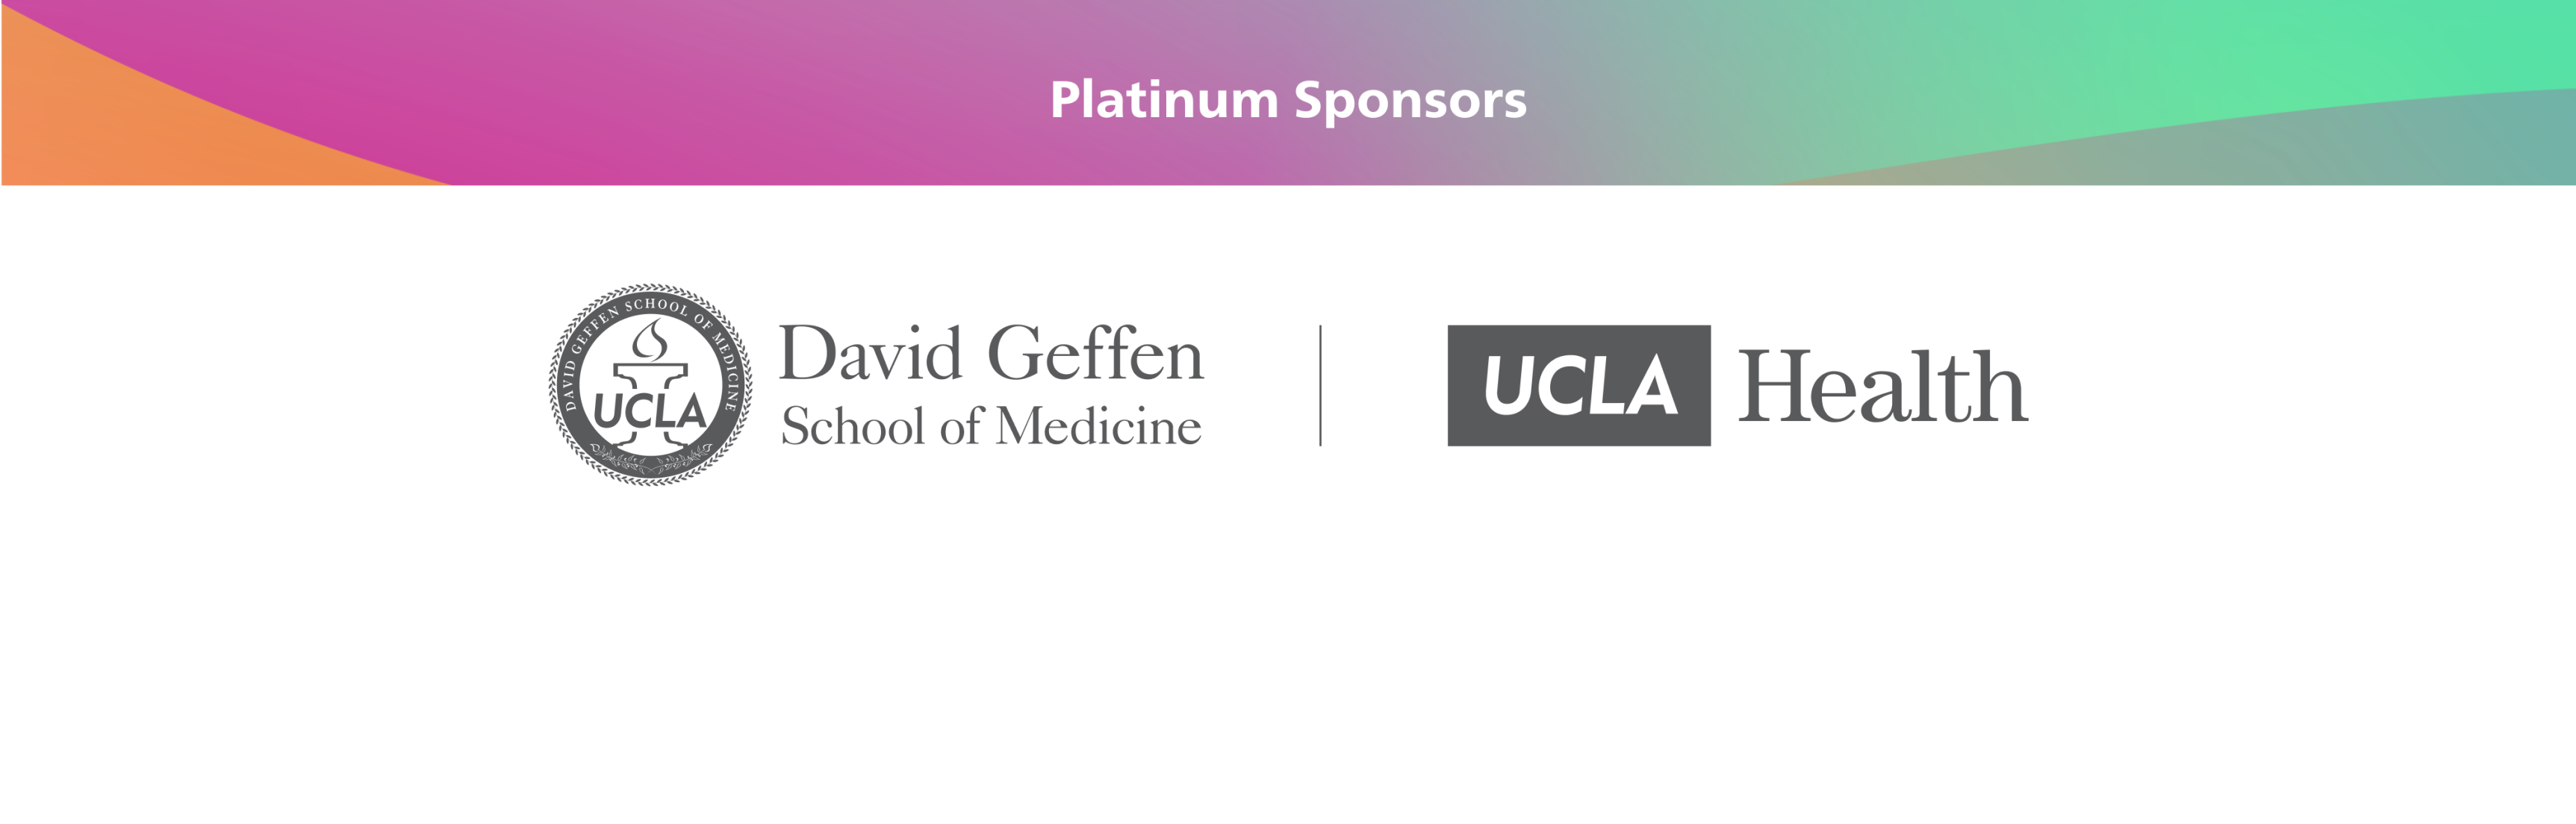 Dream Show platinum sponsor UCLA Health and the David Geffen School of Medicine